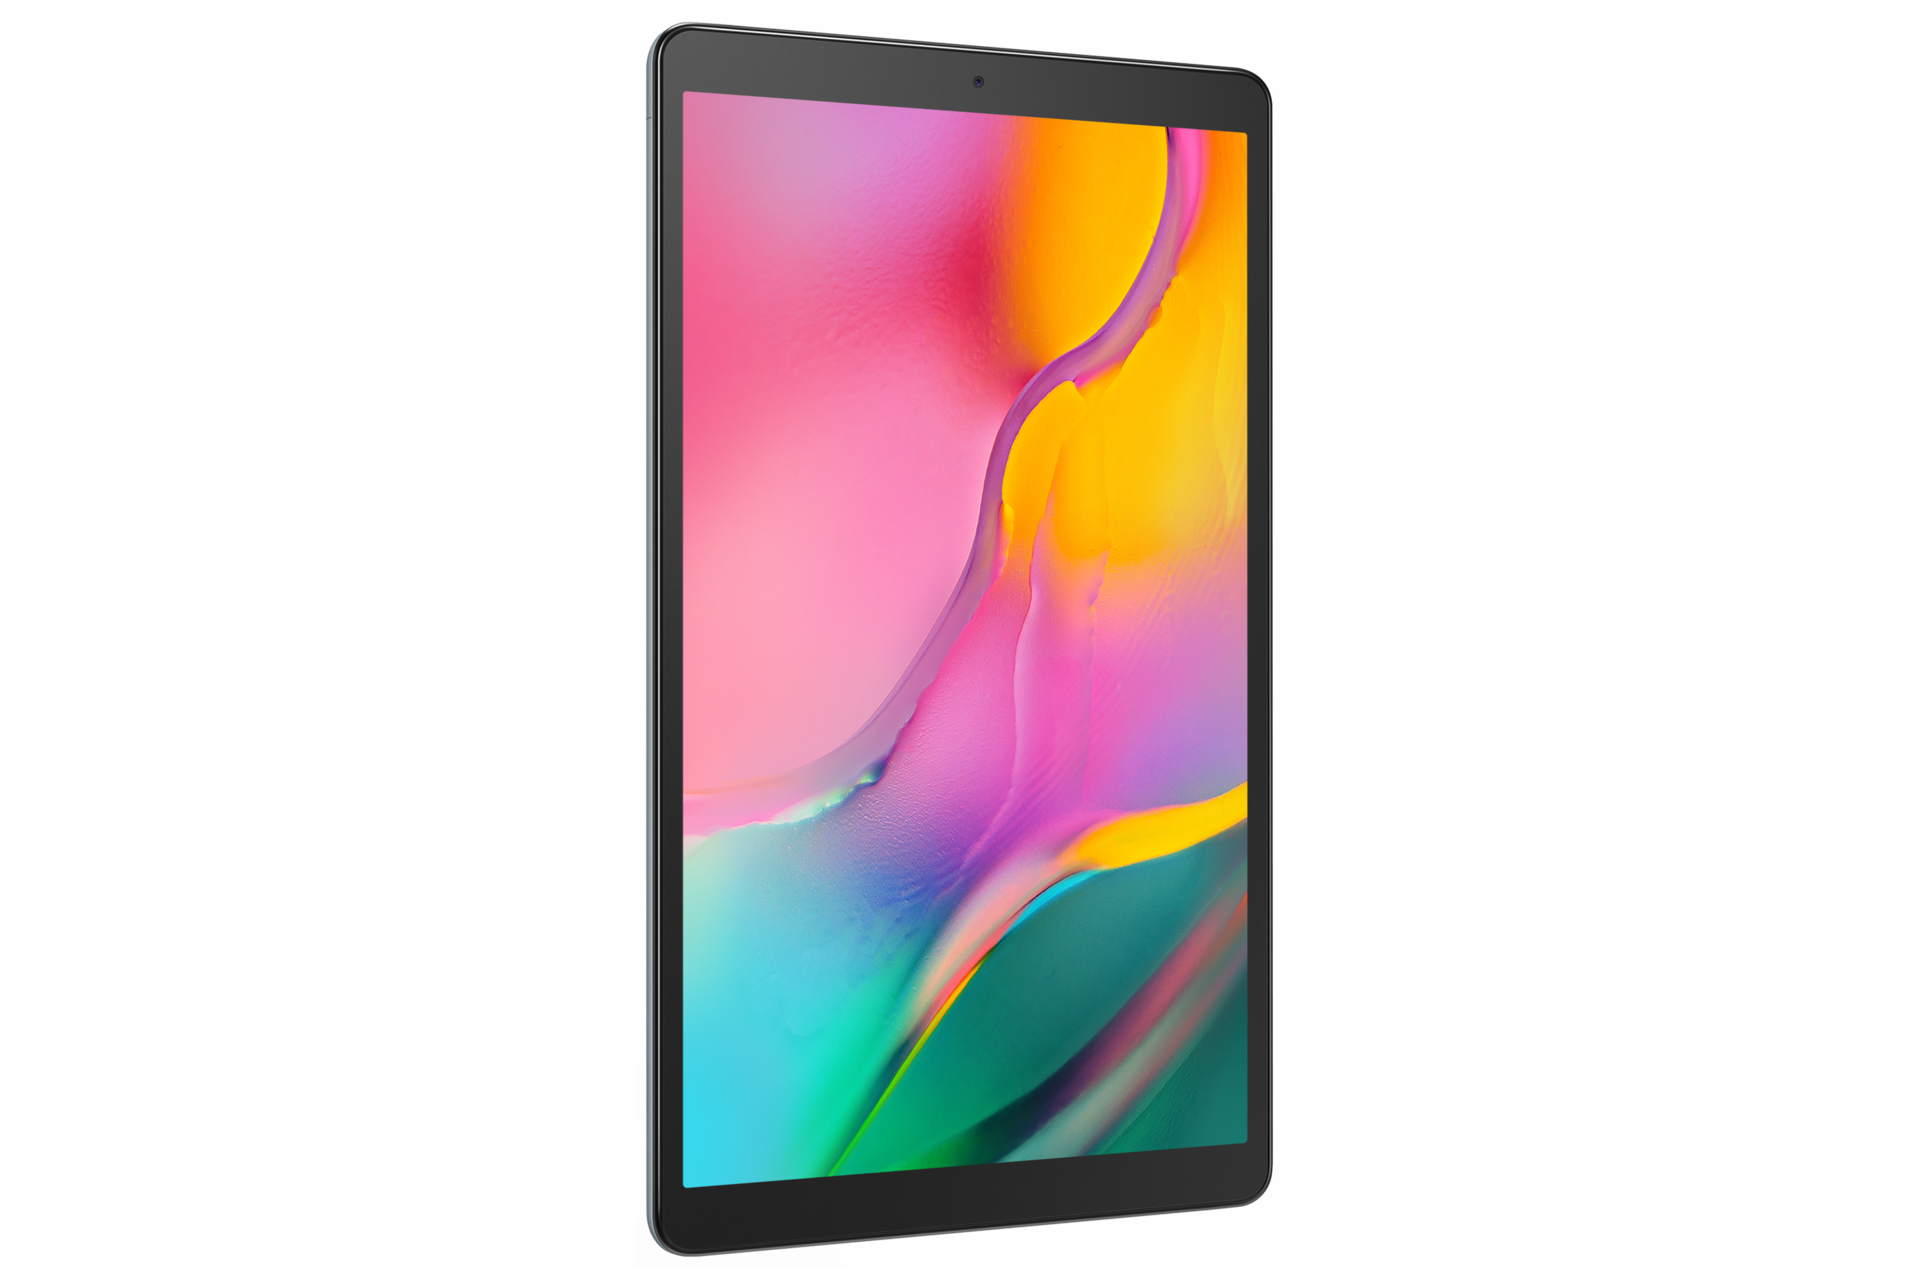  Samsung Galaxy Tab A 10.1" (4G) Lateral Esquerda Prata SM-T515NZSLZTO